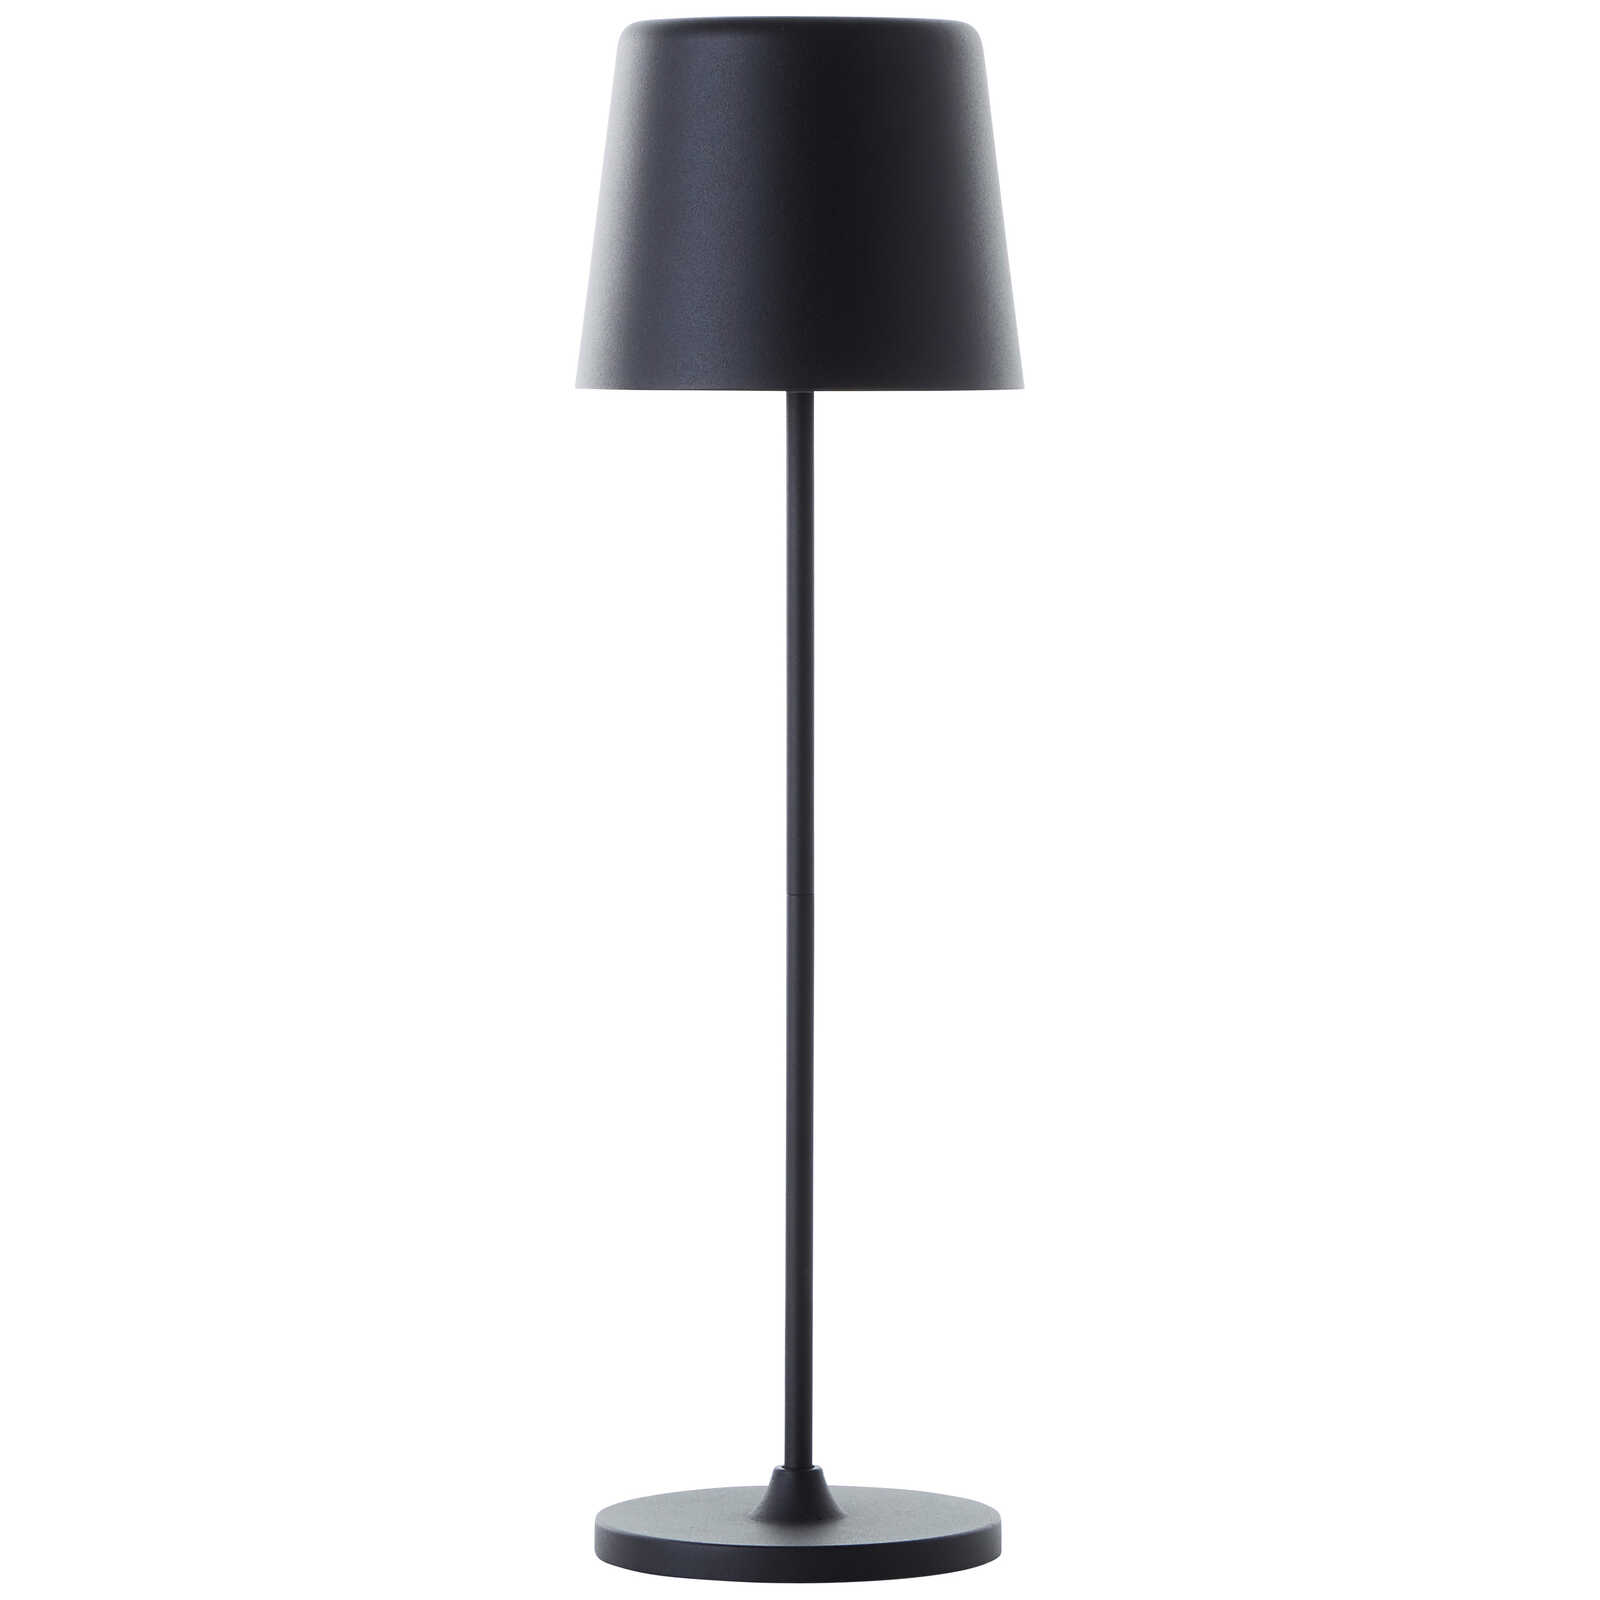             Metal table lamp - Cosy 6 - Black
        